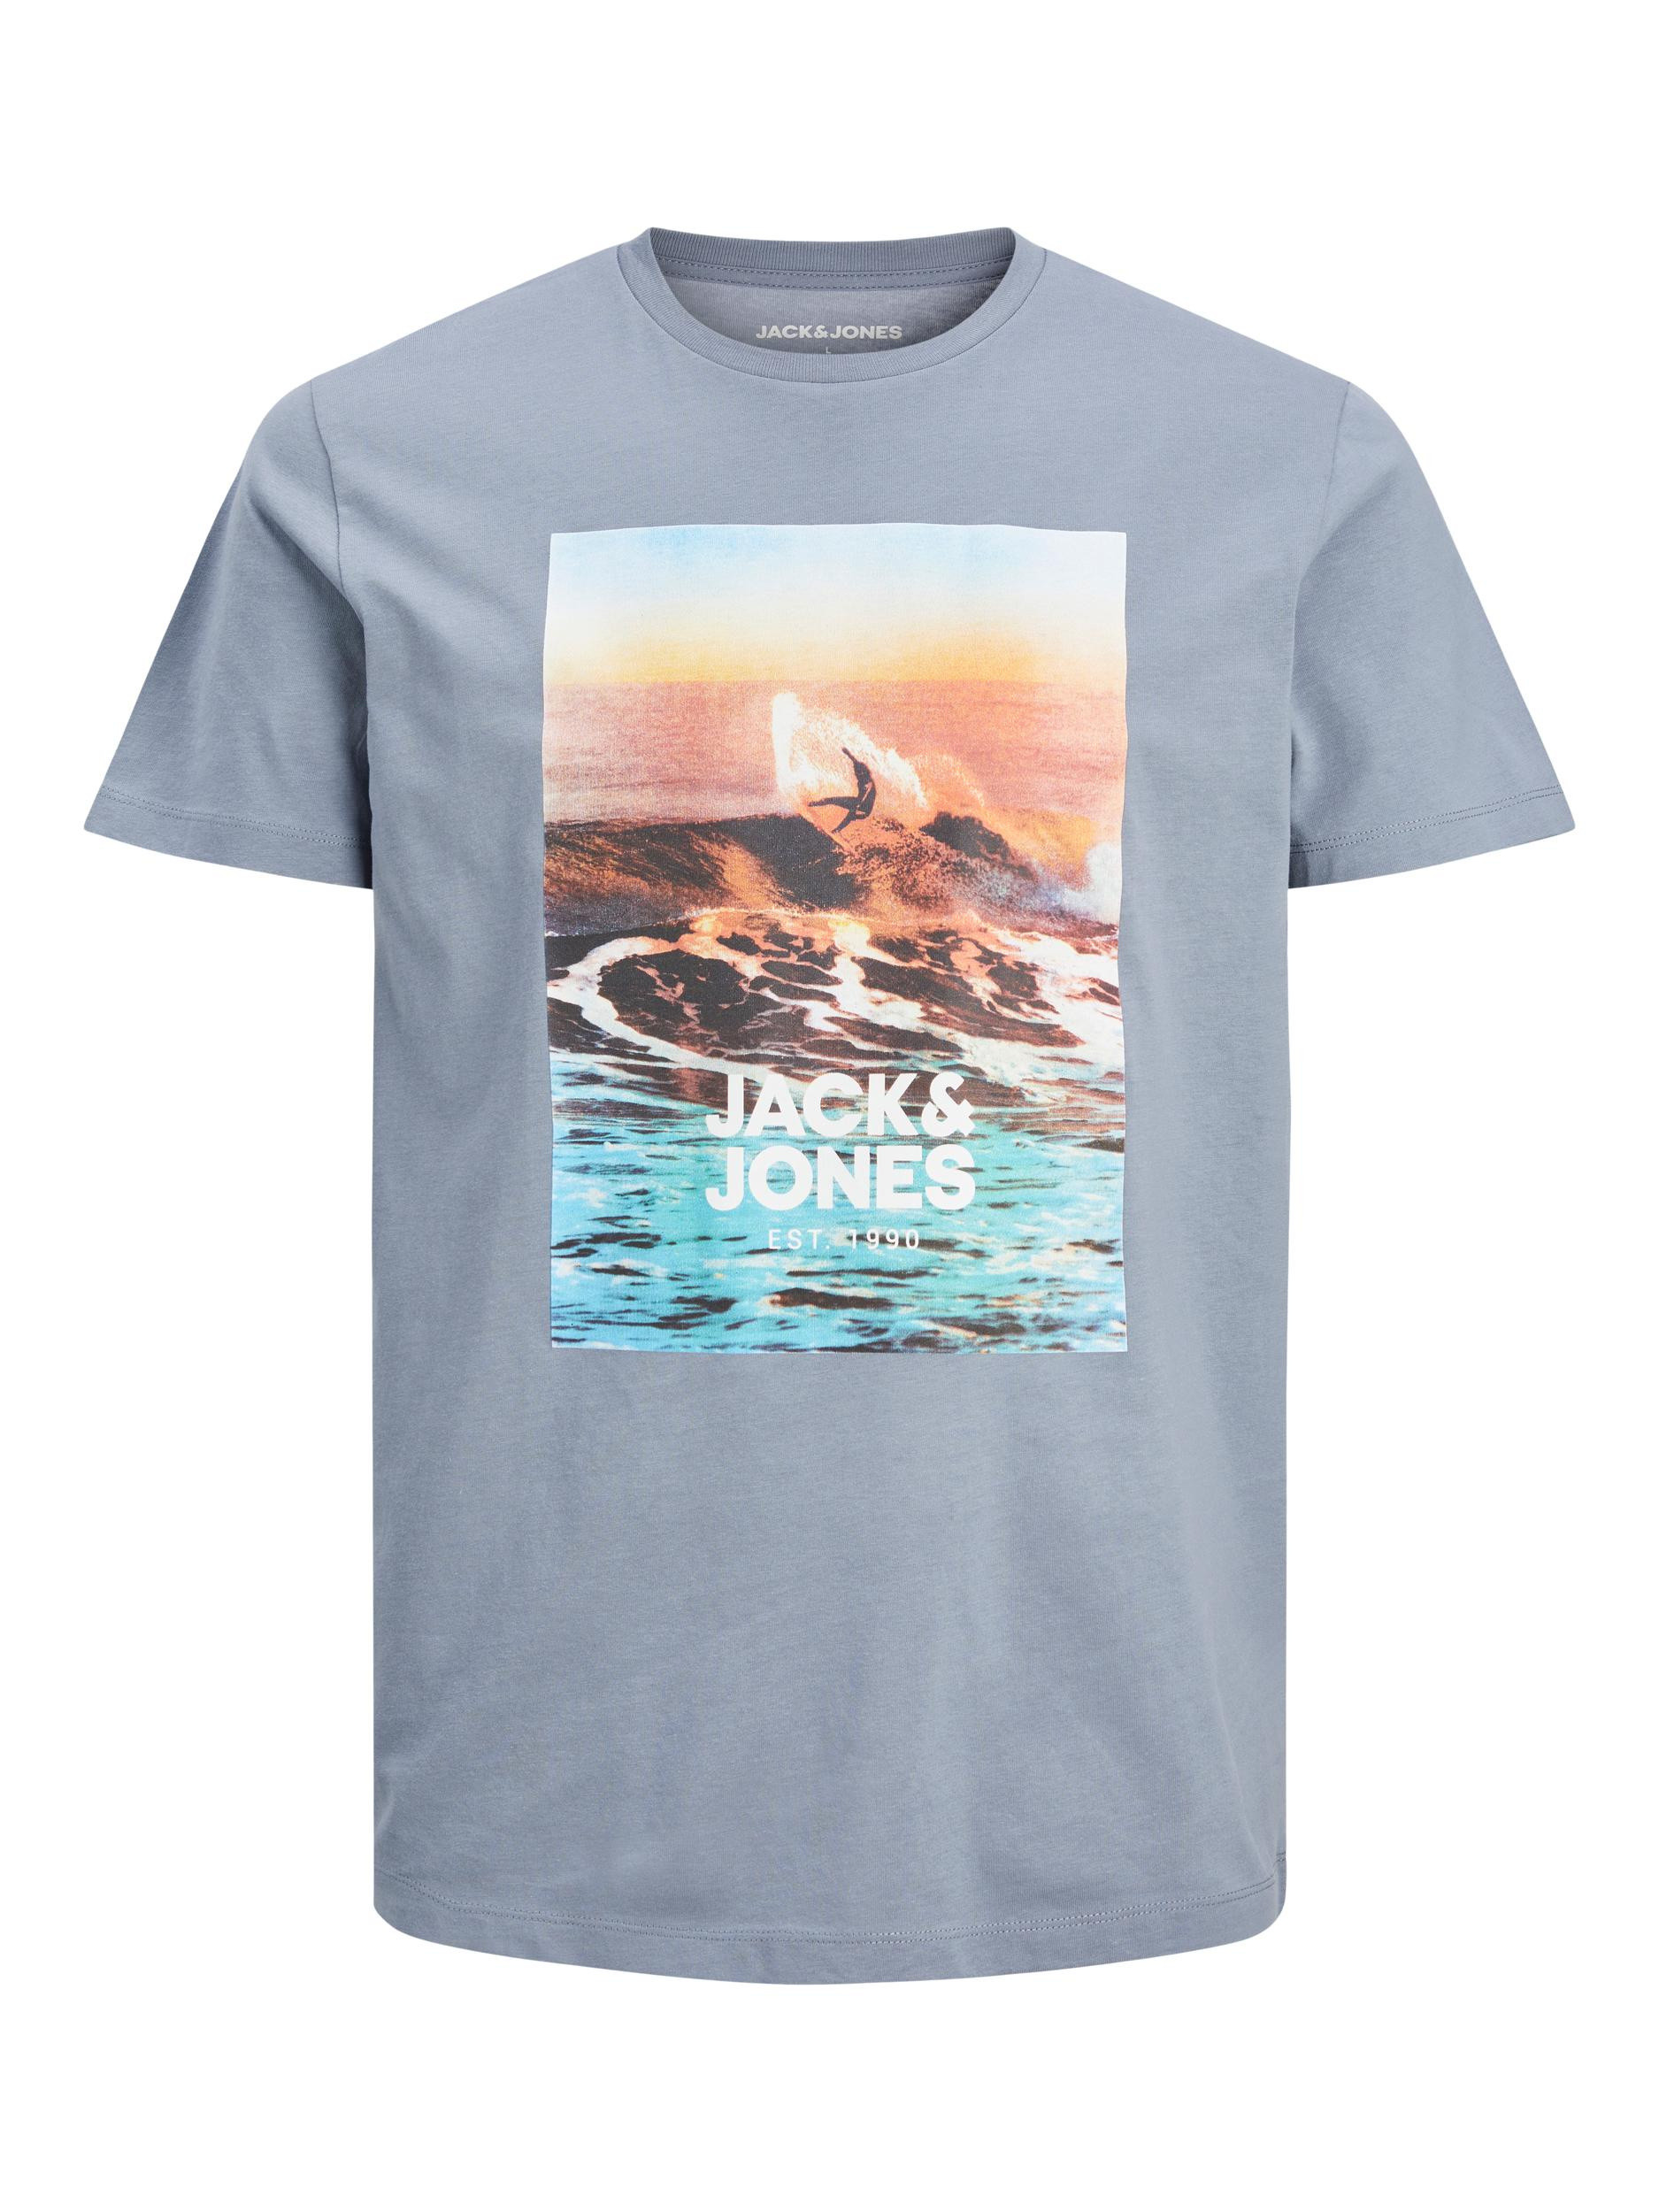 Jack & Jones - T-shirt con stampa in cotone, Grigio, large image number 0